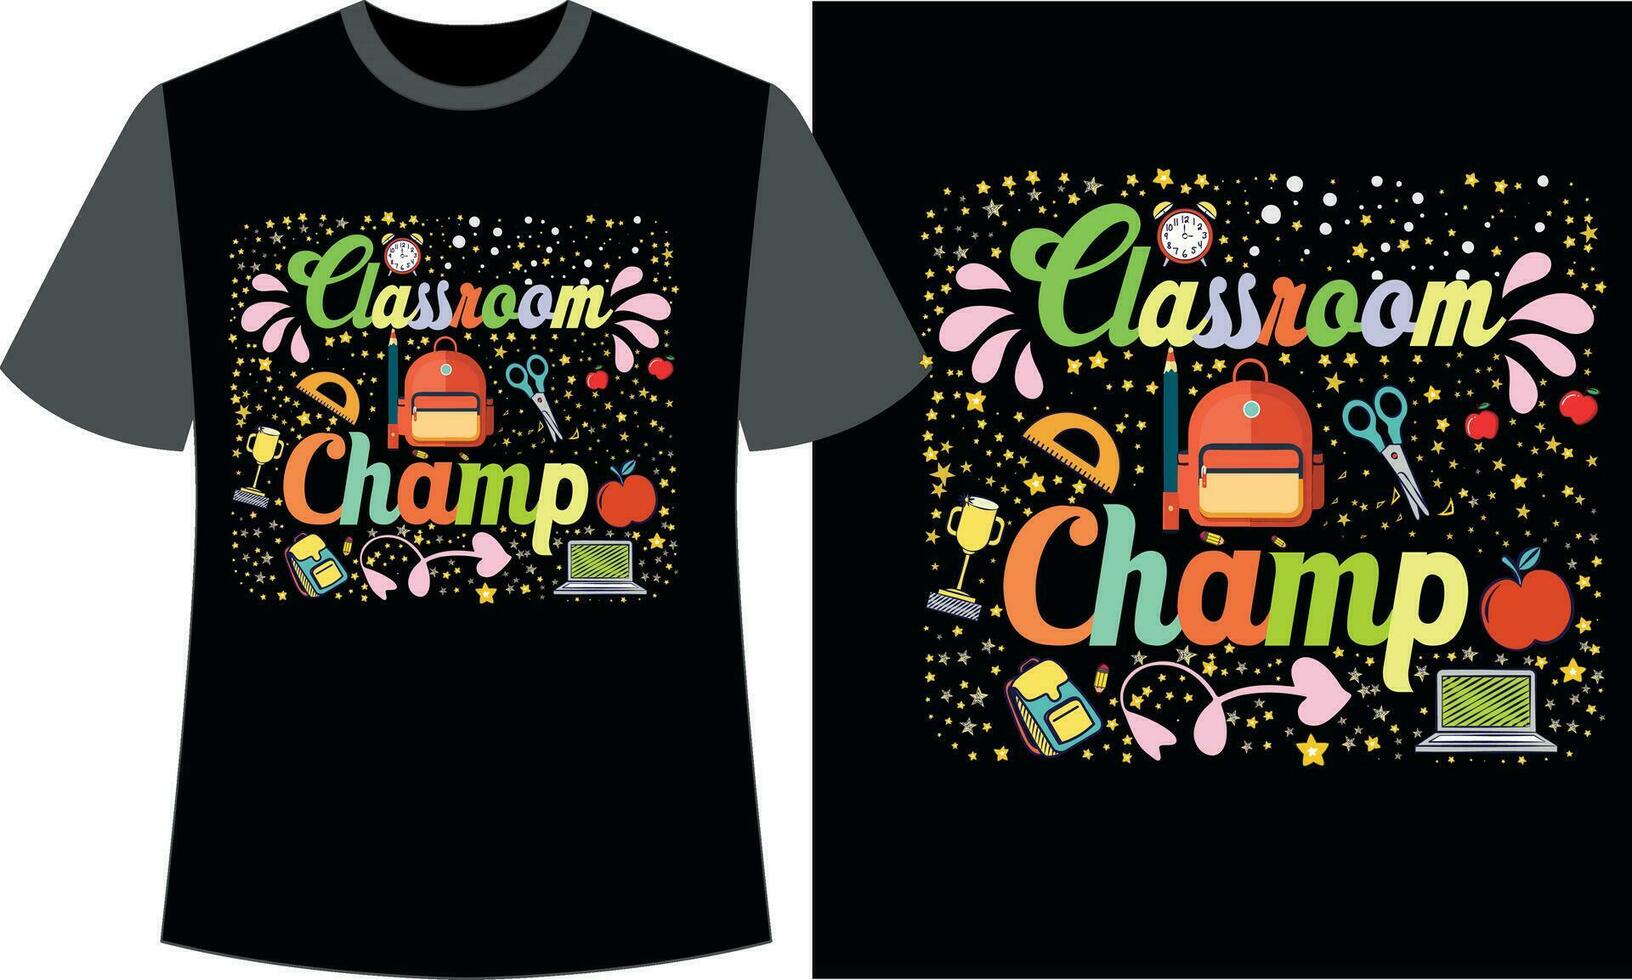 Klassenzimmer Champion T-Shirt Design vektor